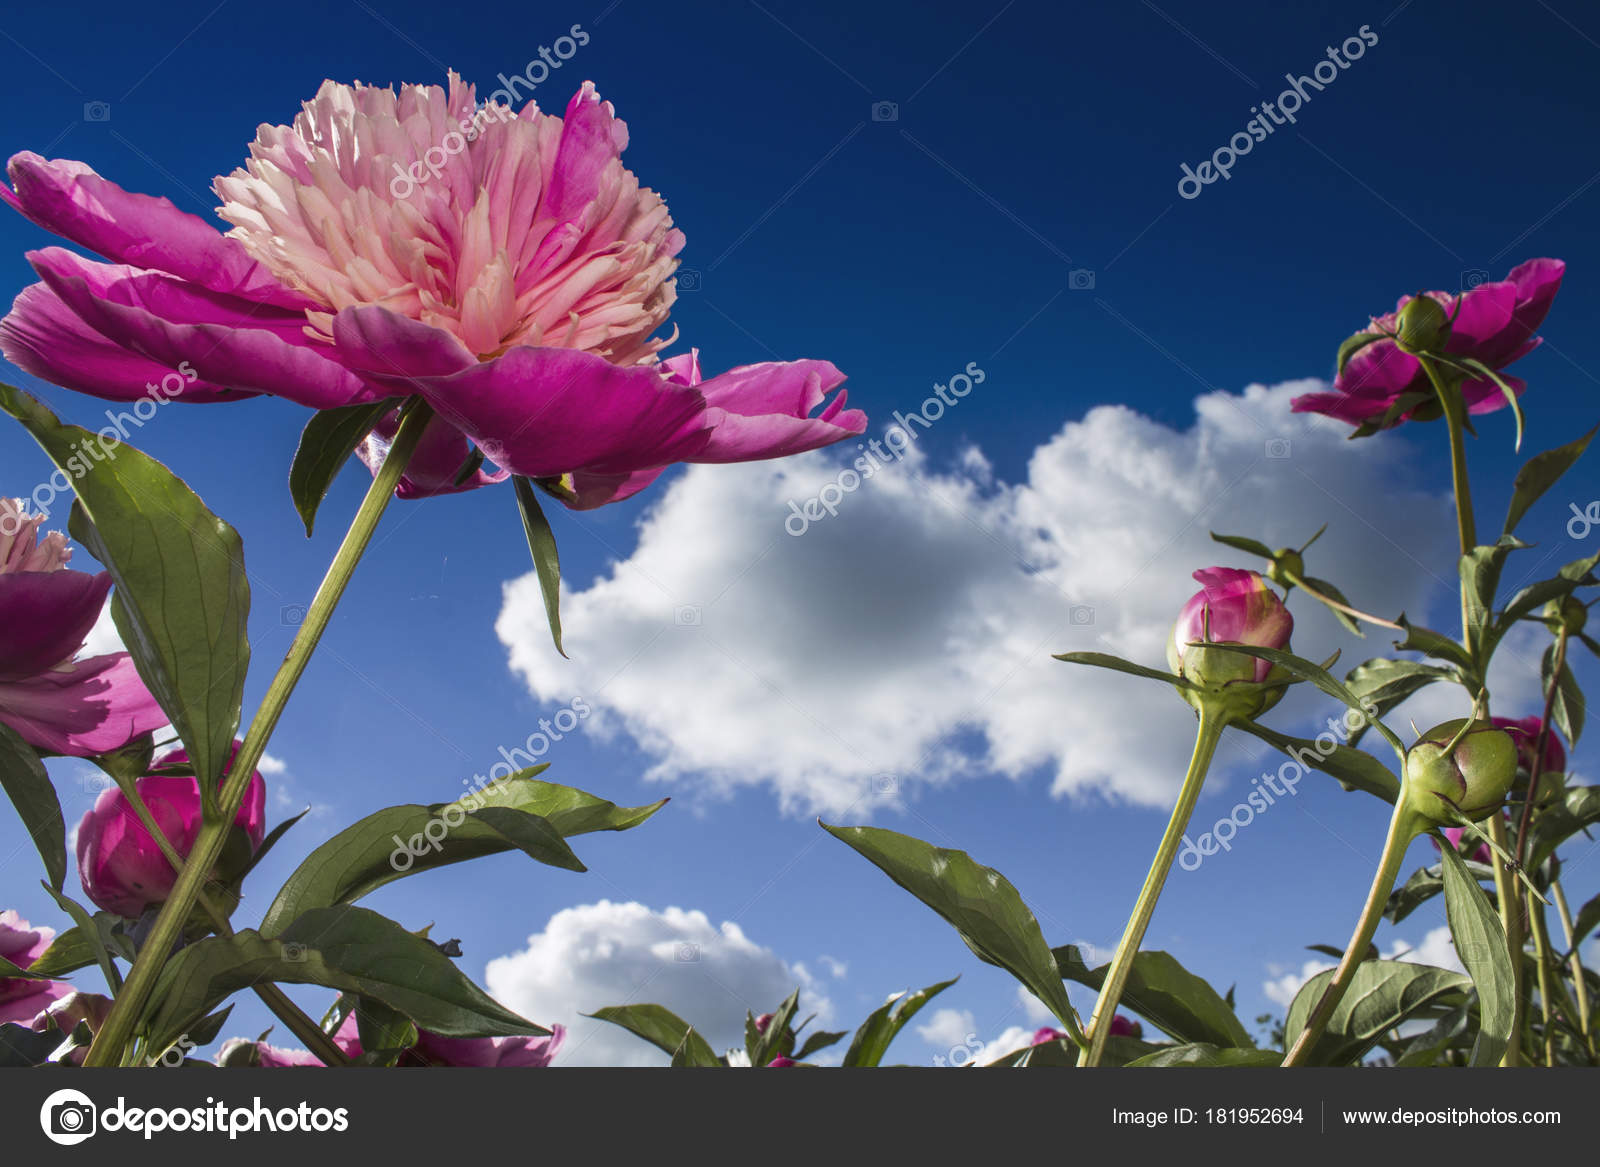 Beautiful Peony Flowers Blue Sunny Sky Background White Clouds Stock Photo C Vladsavinproduction 181952694